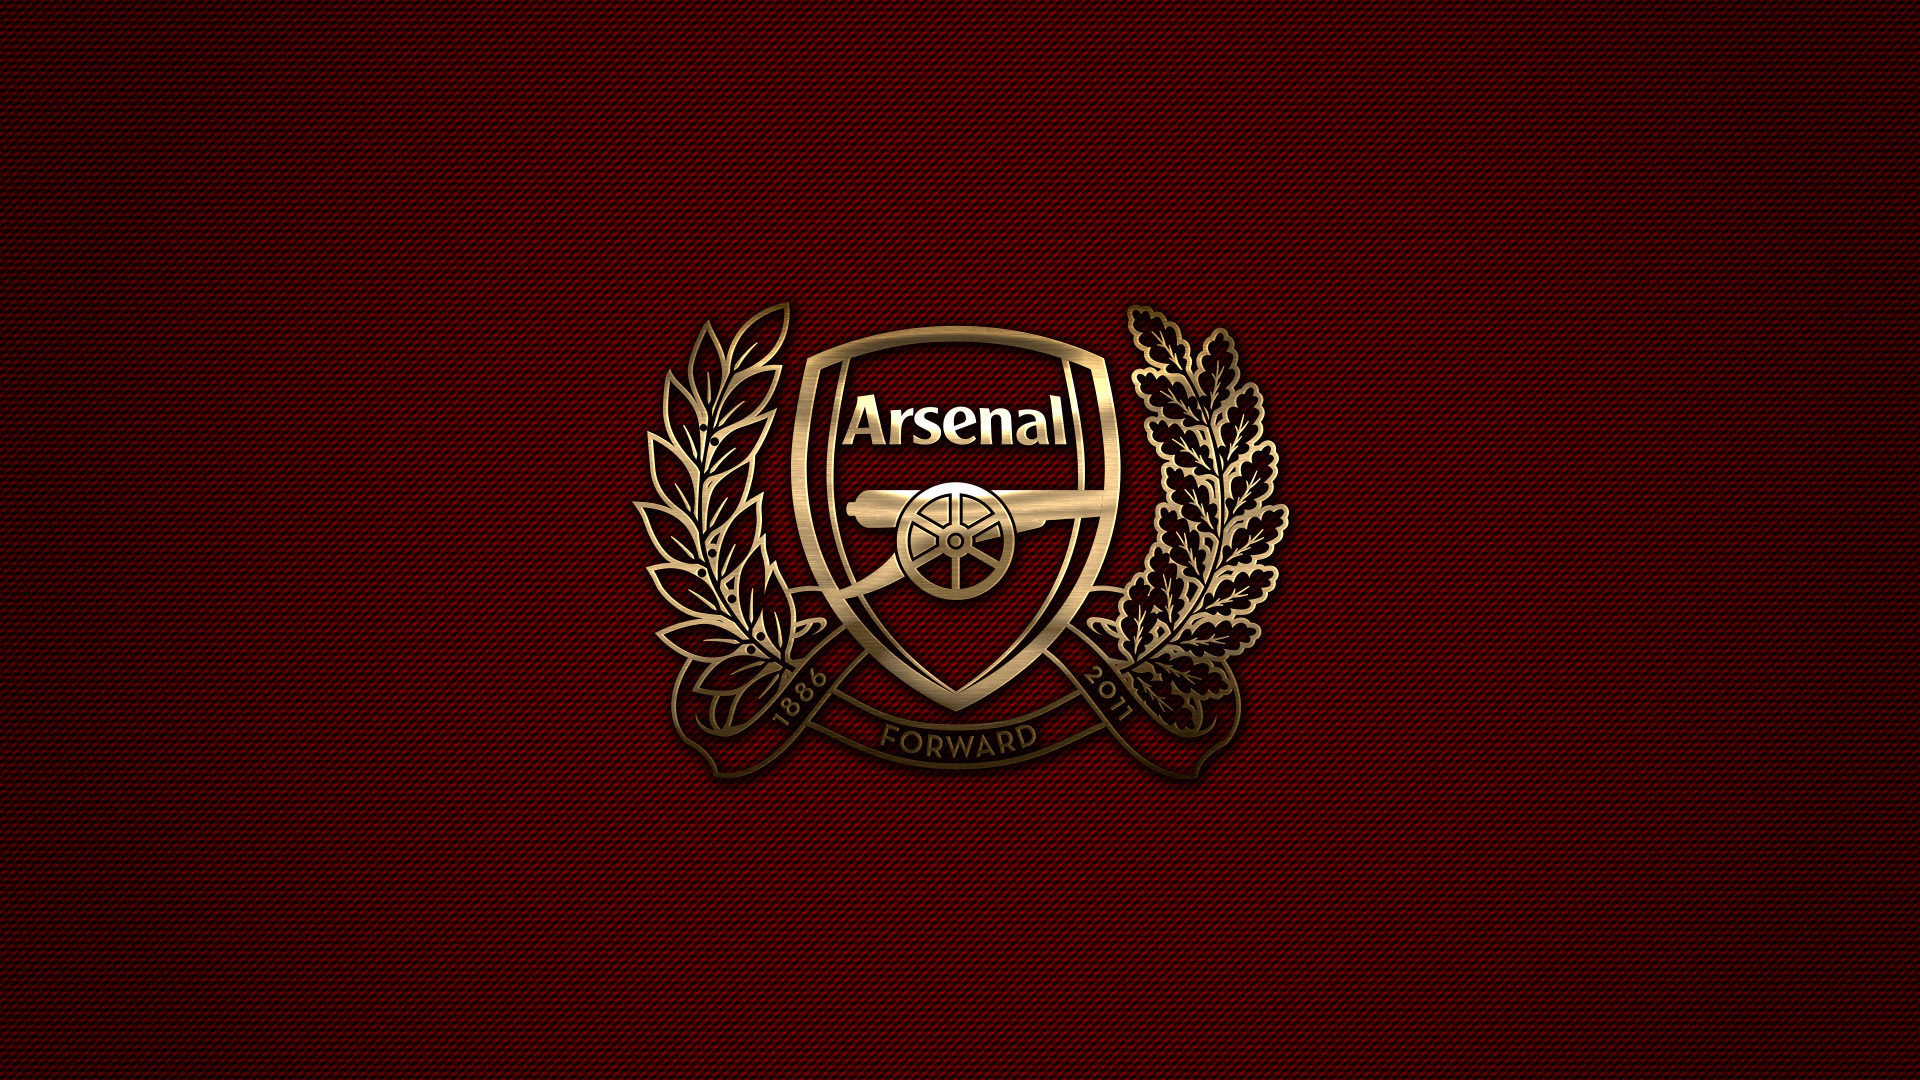 Arsenal Fc Full HD Widescreen wallpapers for desktop